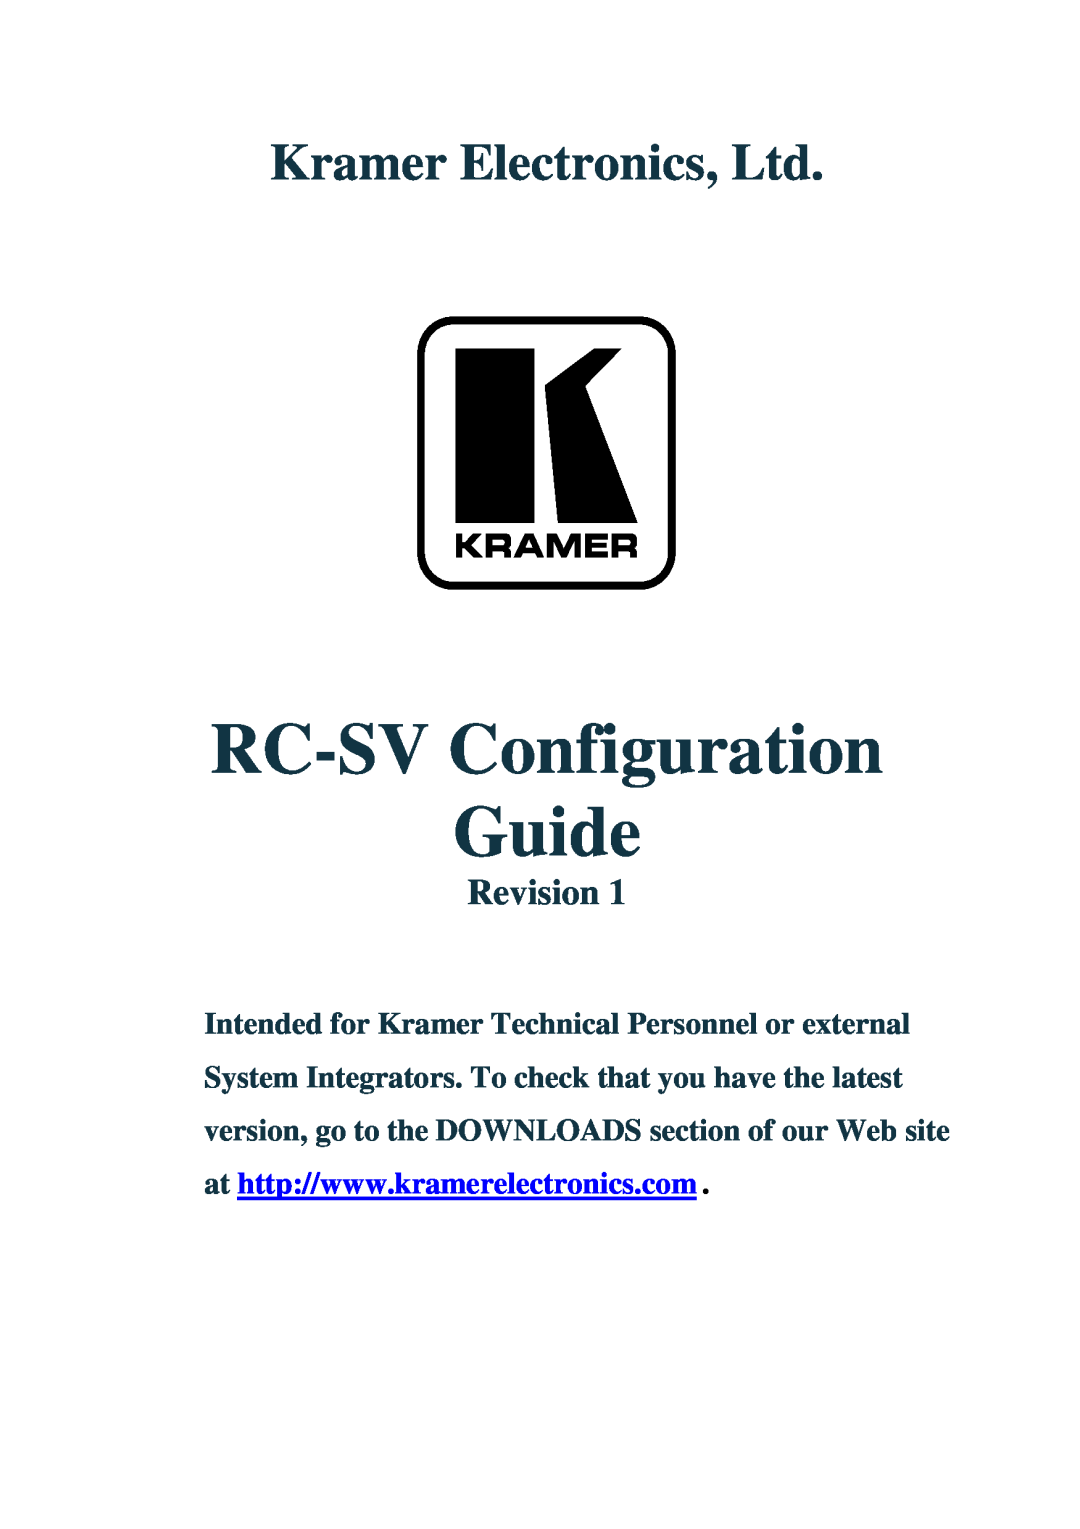 Kramer Electronics manual RC-SV Configuration Guide, Revision 